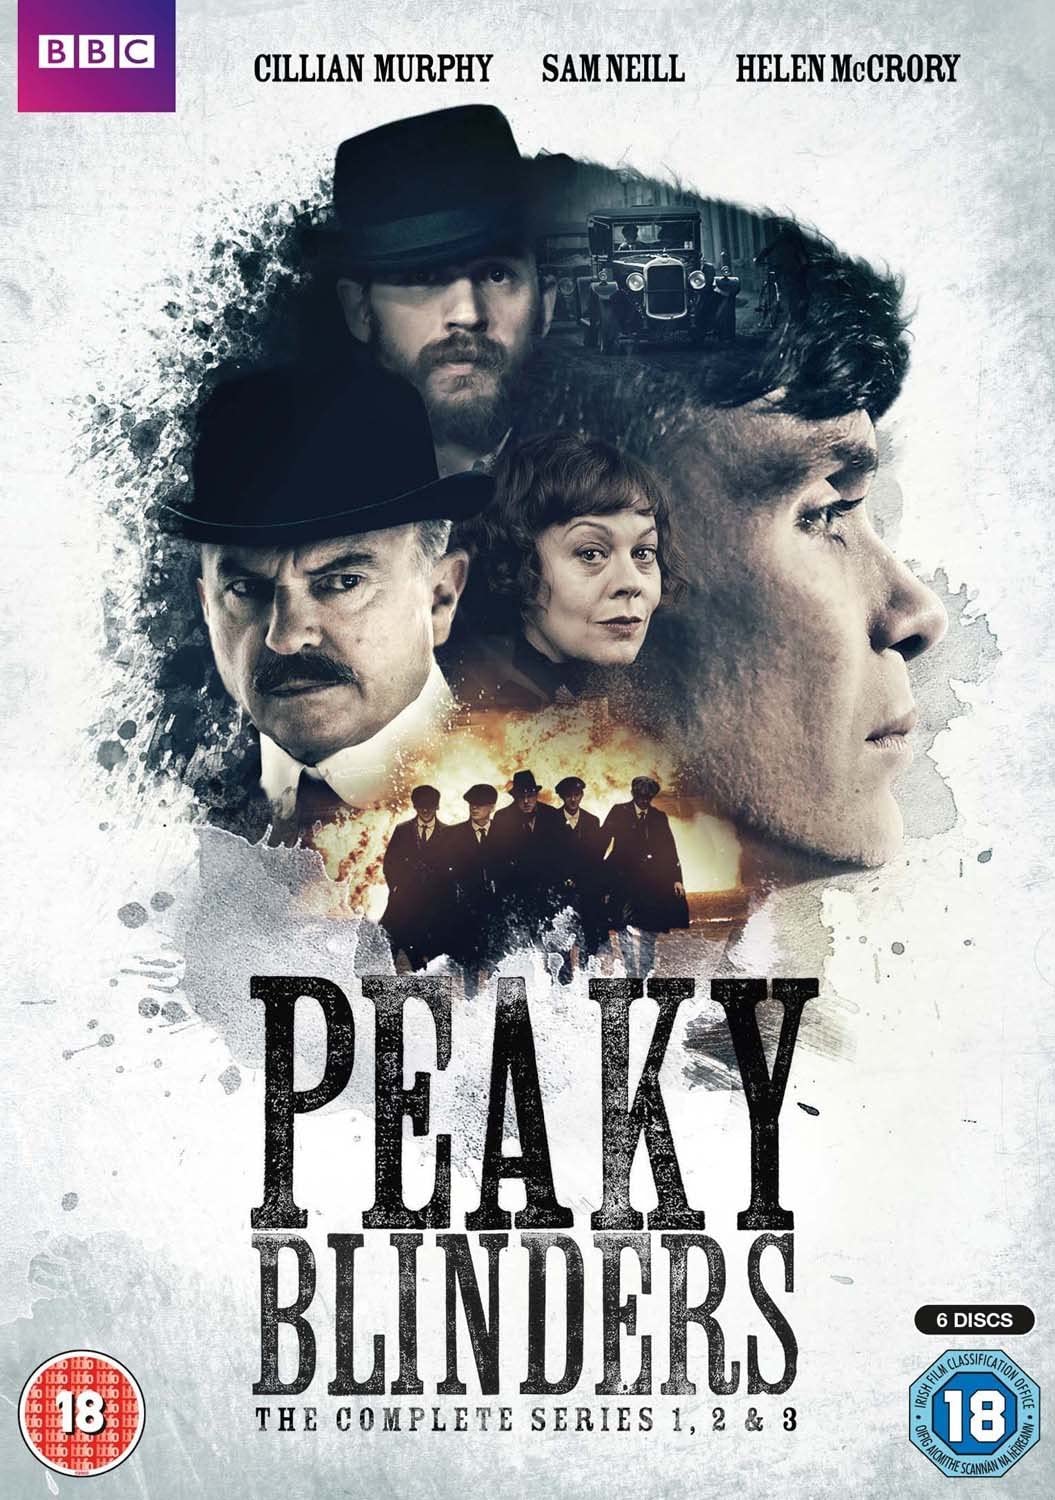 Peaky Blinders - Boxset Series 1-3 [DVD] [2016]